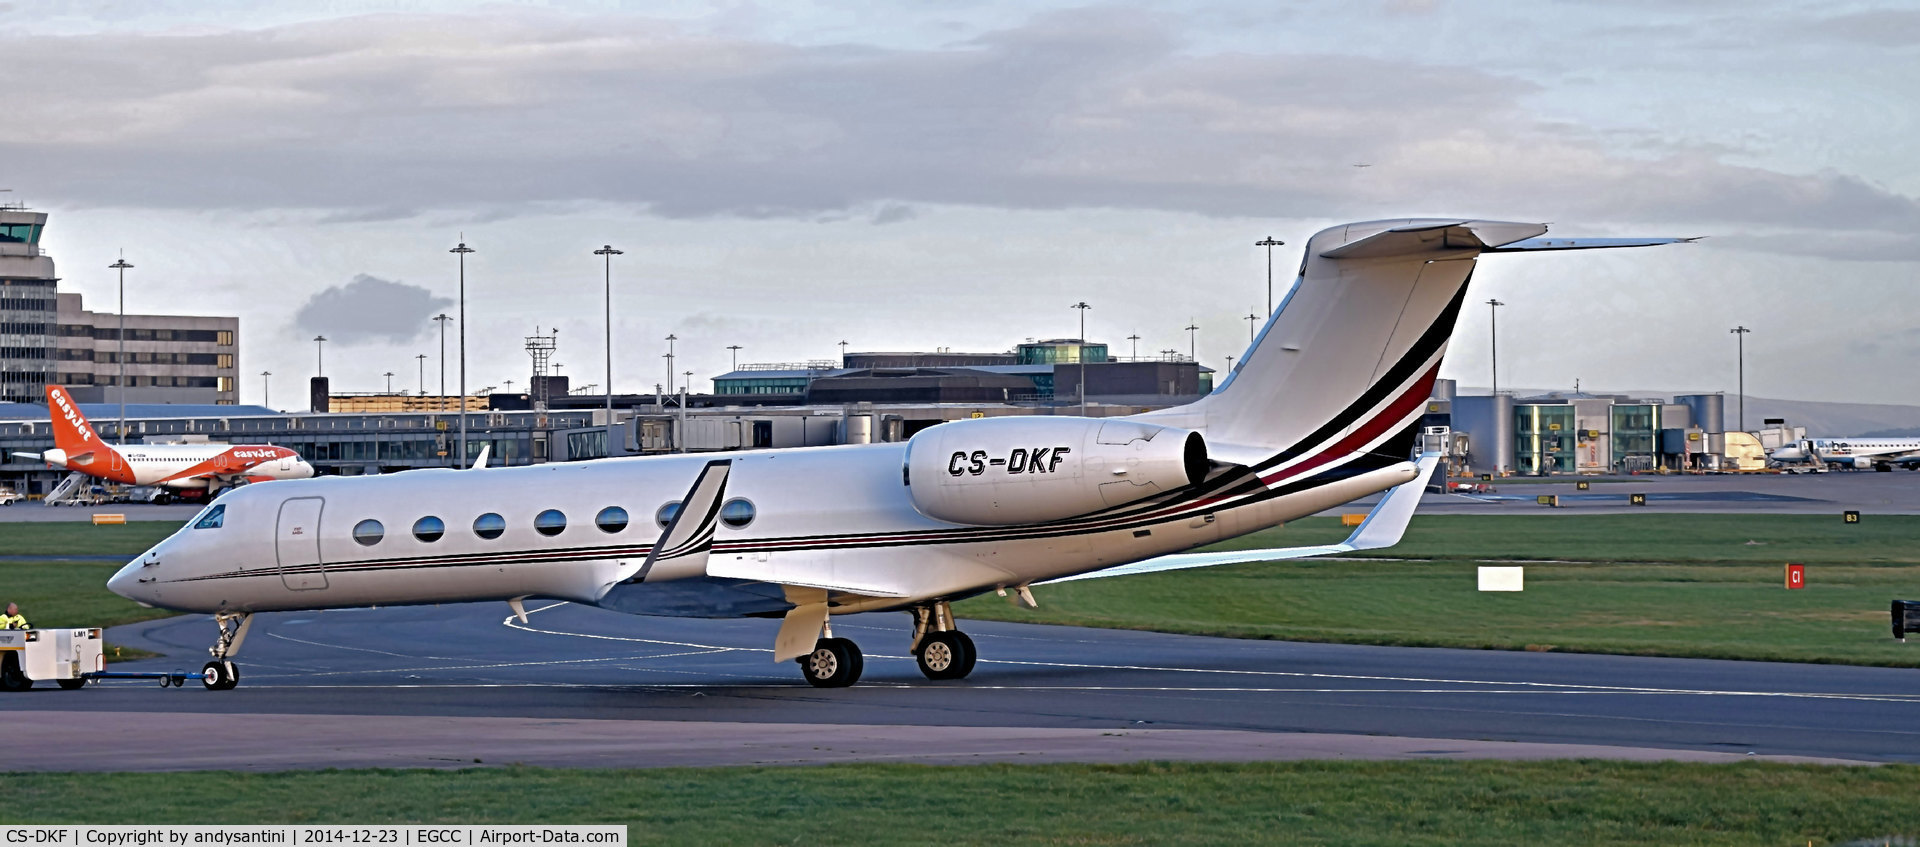 CS-DKF, 2006 Gulfstream Aerospace GV-SP (G550) C/N 5099, been towed onto the [FBO ex ramp] @ egcc